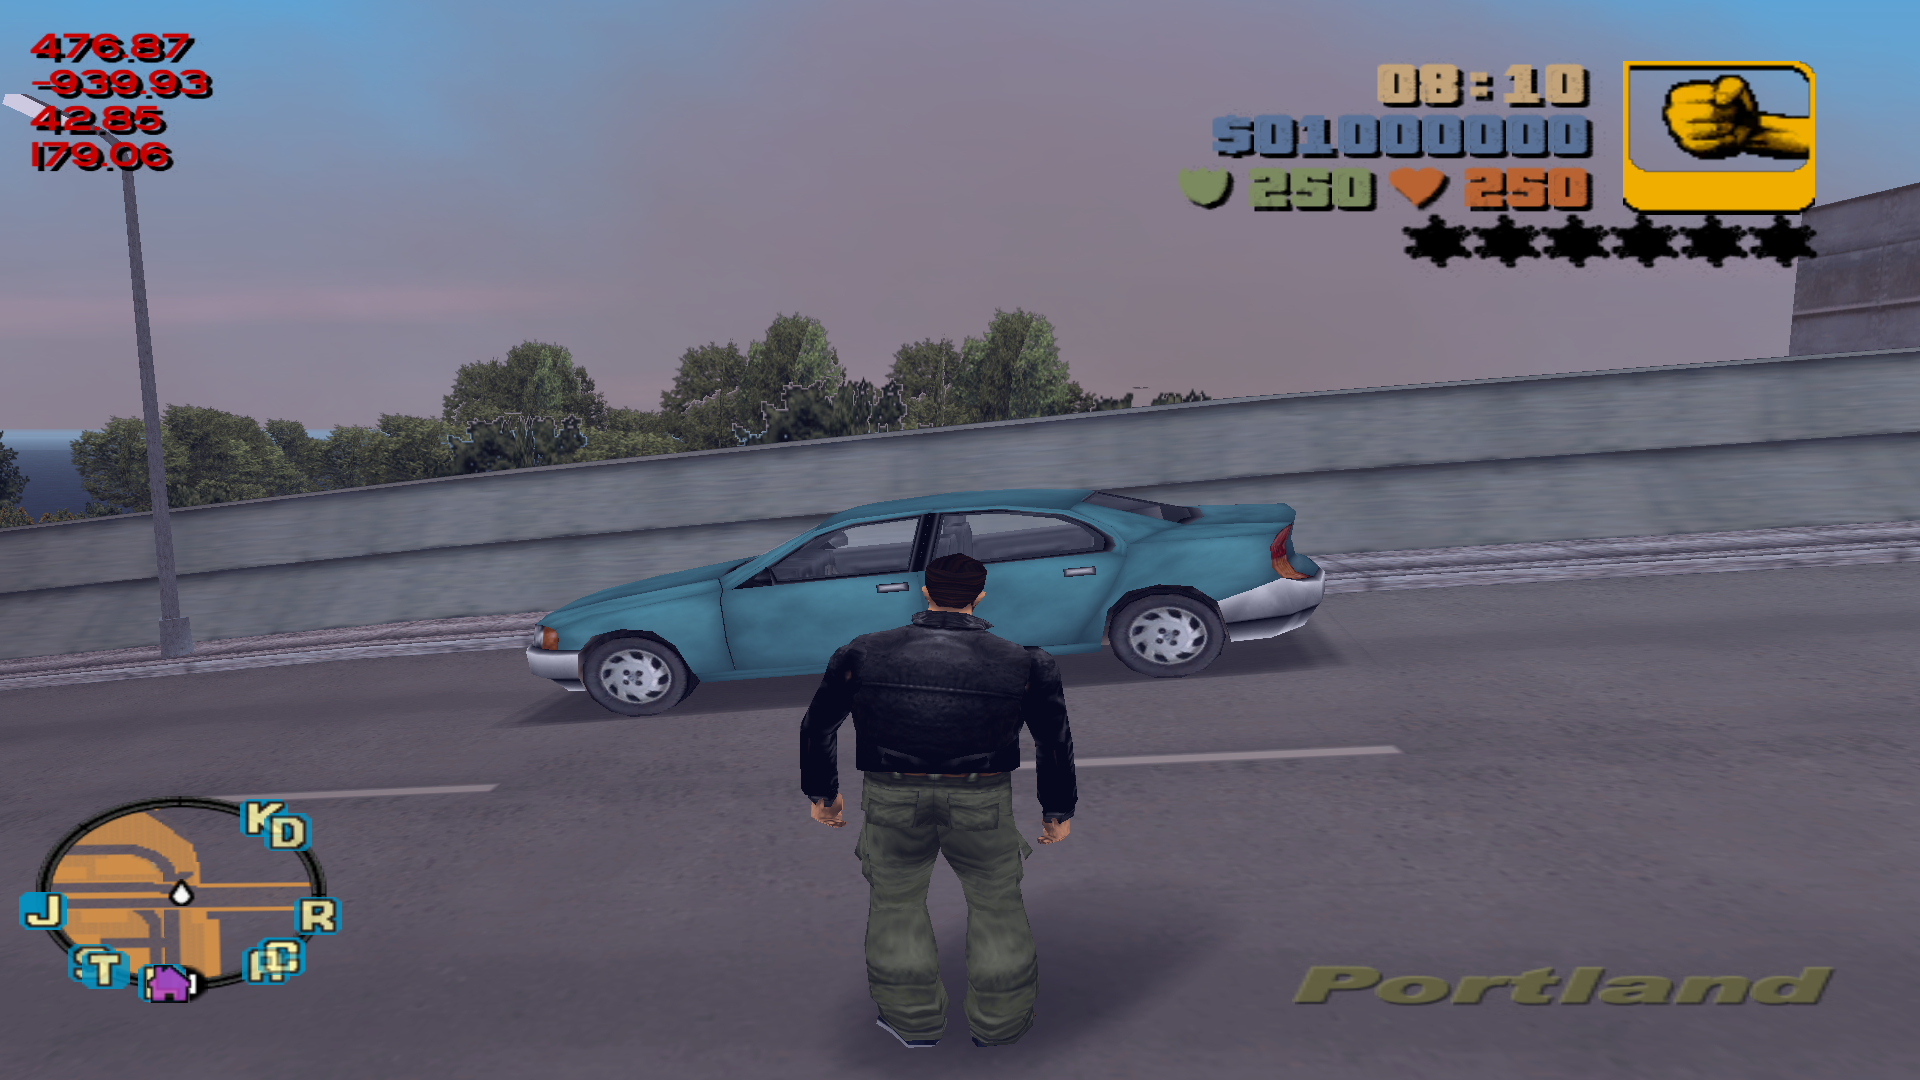 Grand Theft Auto III Grand Theft Auto V Game Mod Wiki, vice city